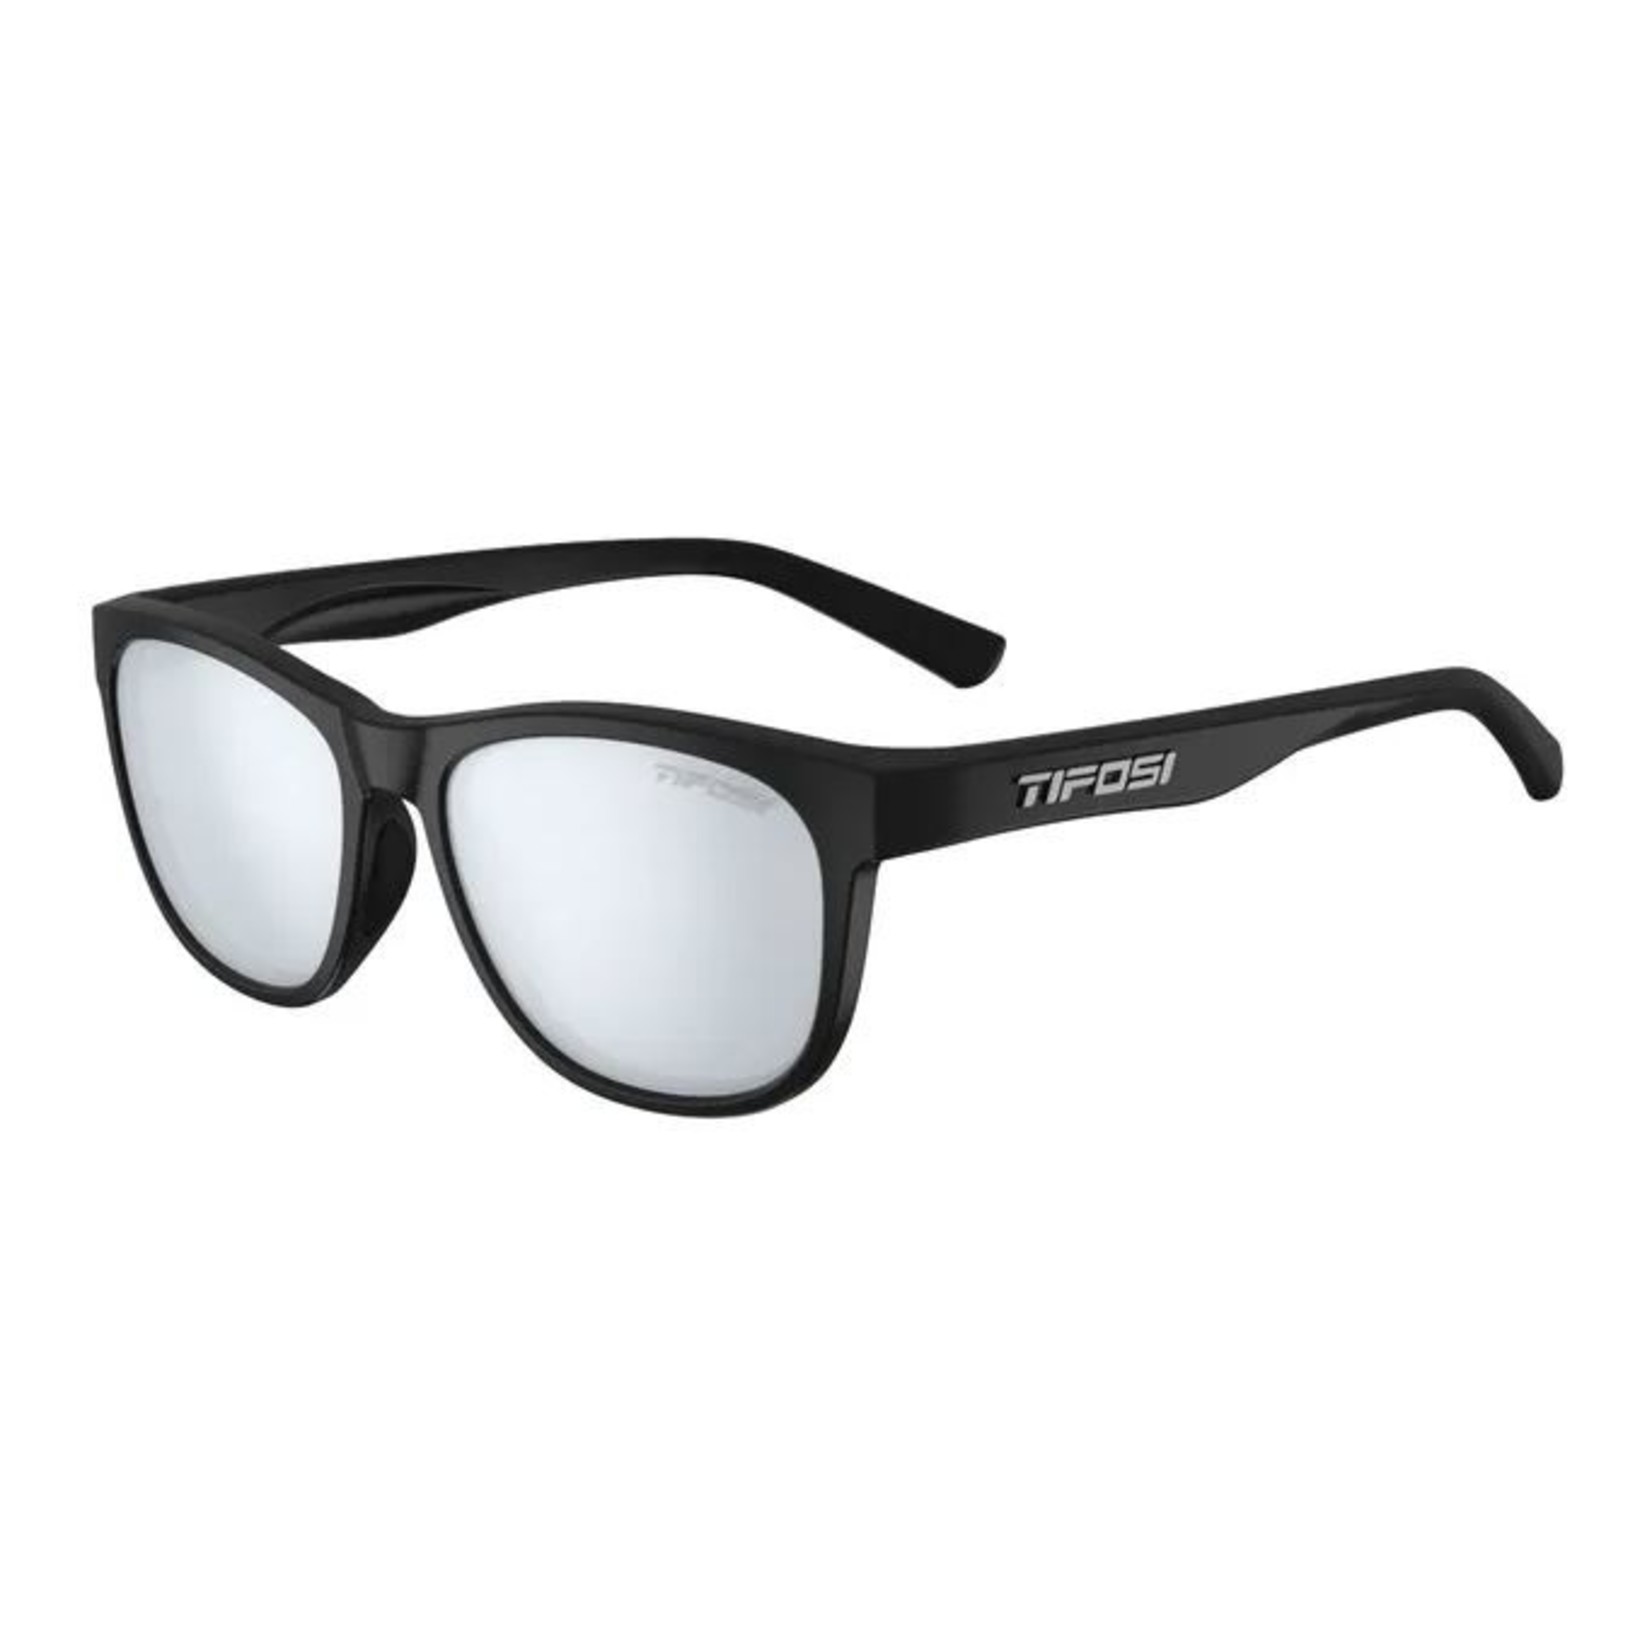 Tifosi Tifosi Cycling Sunglasses - Swank - Satin Lifestyle Glasses - Black